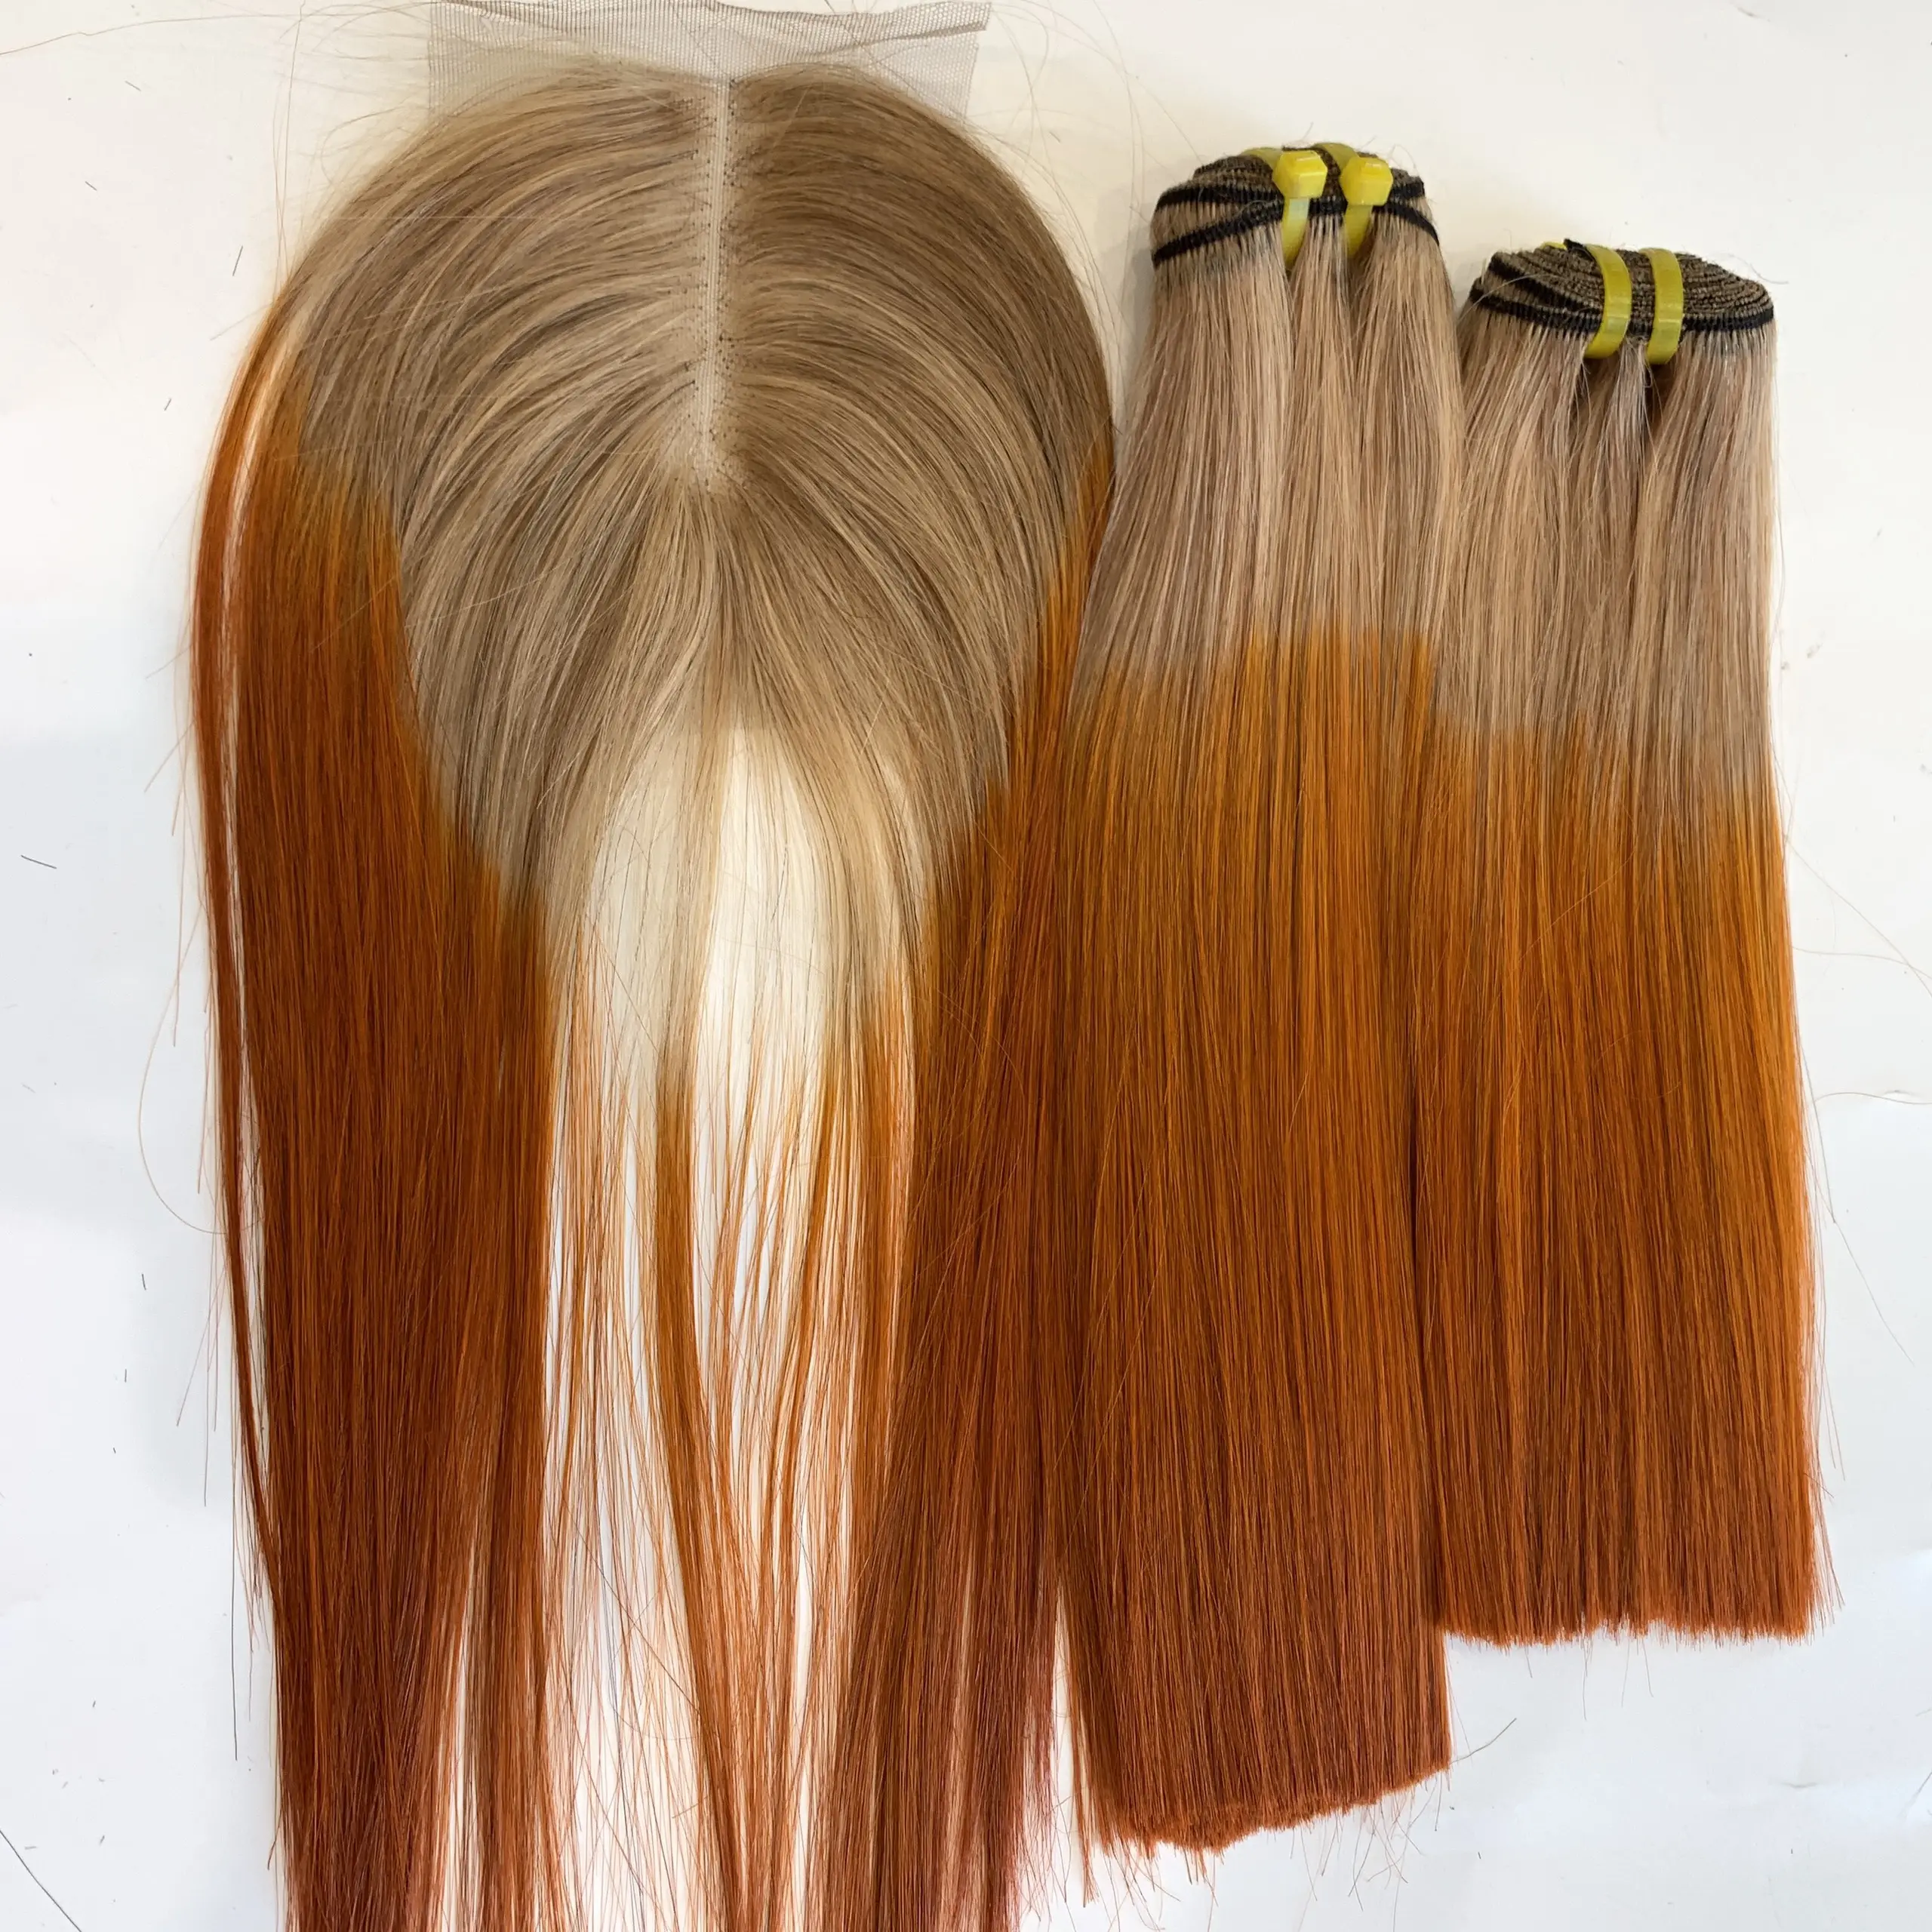 Wig rambut manusia lace front pirang lurus tulang + jingga rambut palsu Indian mentah ali express kutikula gratis bundel rambut sampel